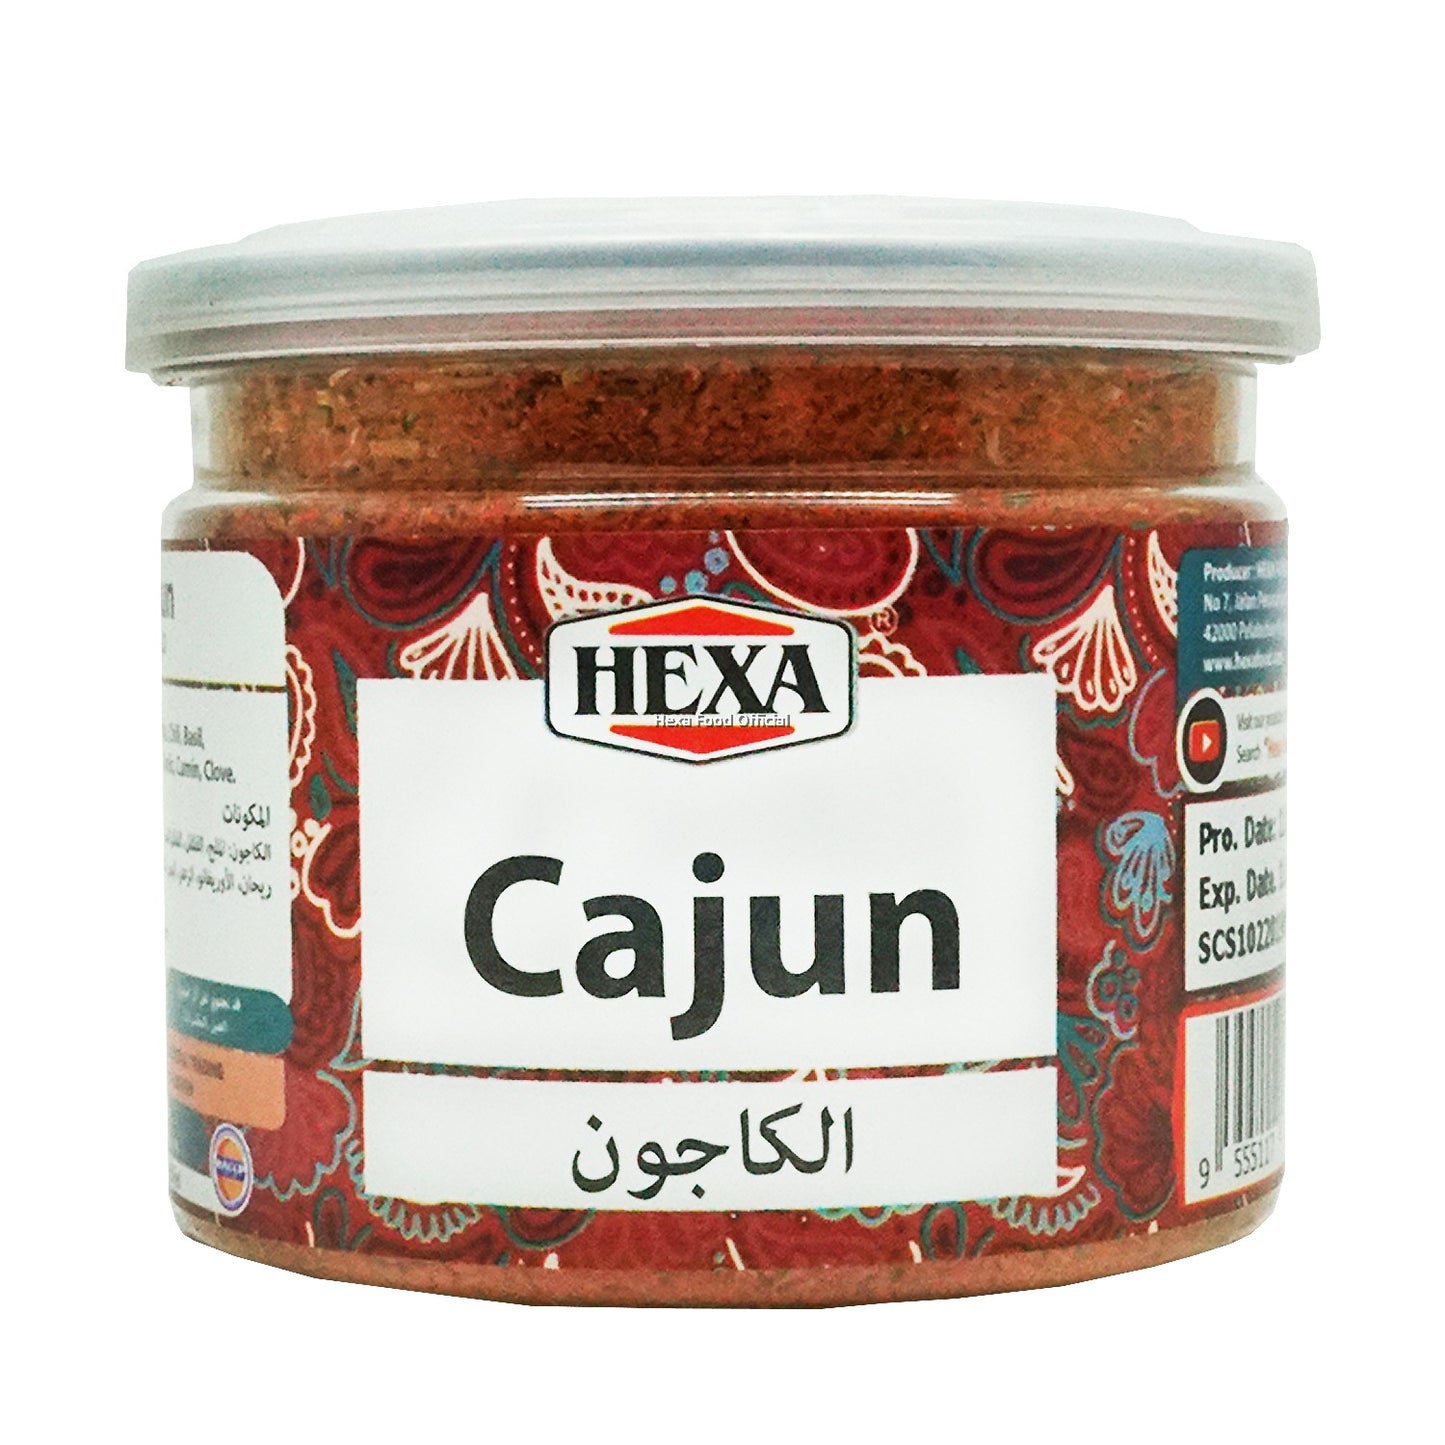 HEXA HALAL Cajun Spice 85gm + HEXA HALAL 4IN1 Italian Herbs (Basil+ Oregano+ Rosemary+ Parsley) 24gm